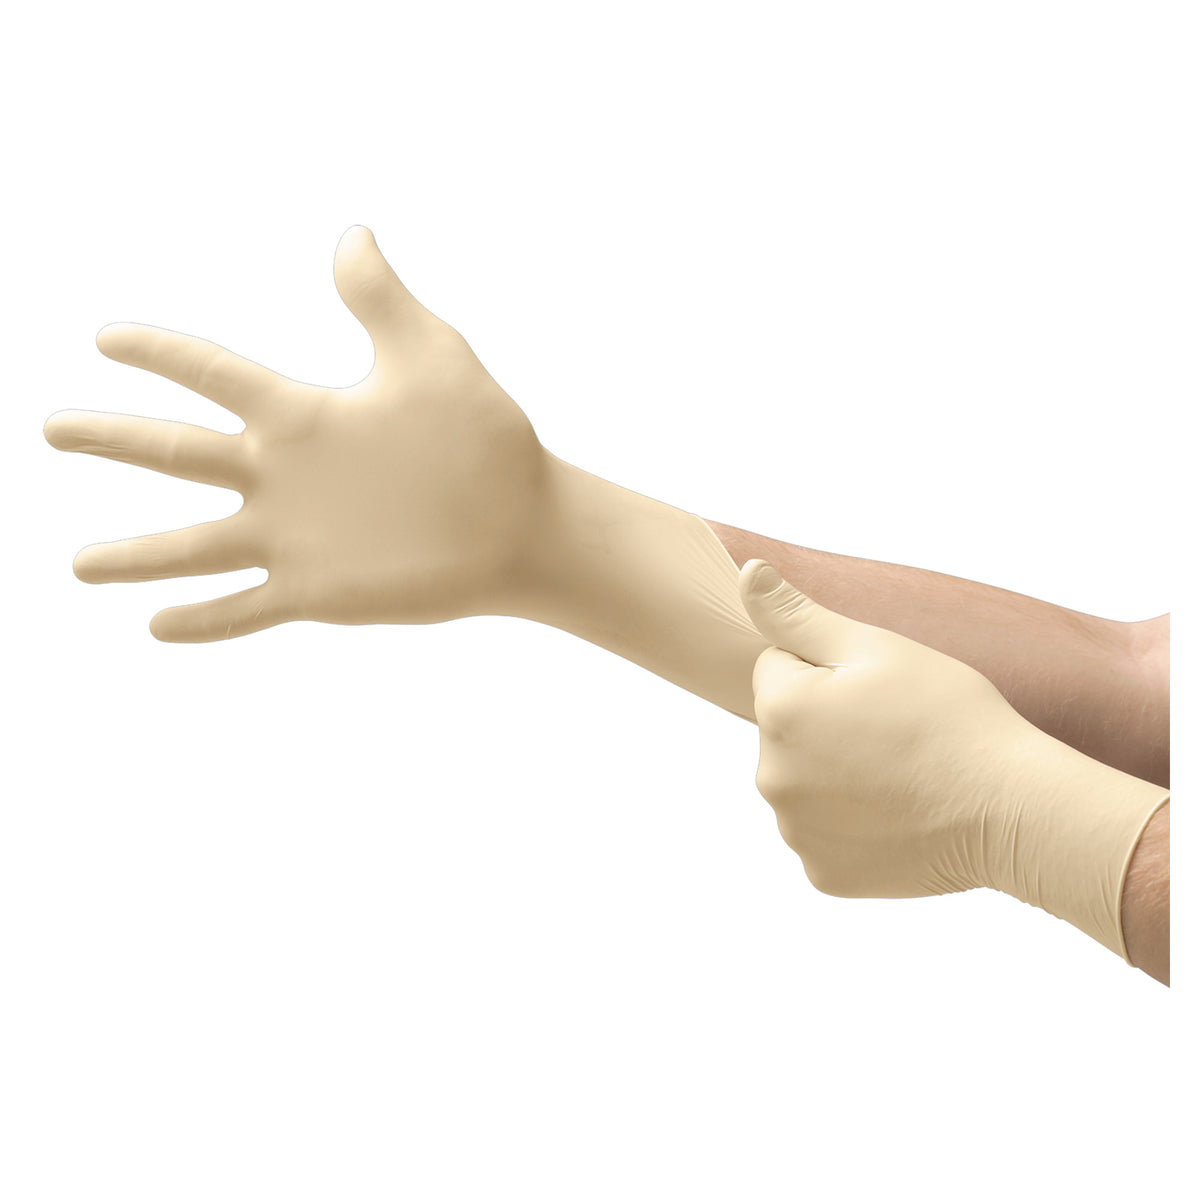 Diamond Grip MF-300 Powder-Free Latex Gloves - Choose Size